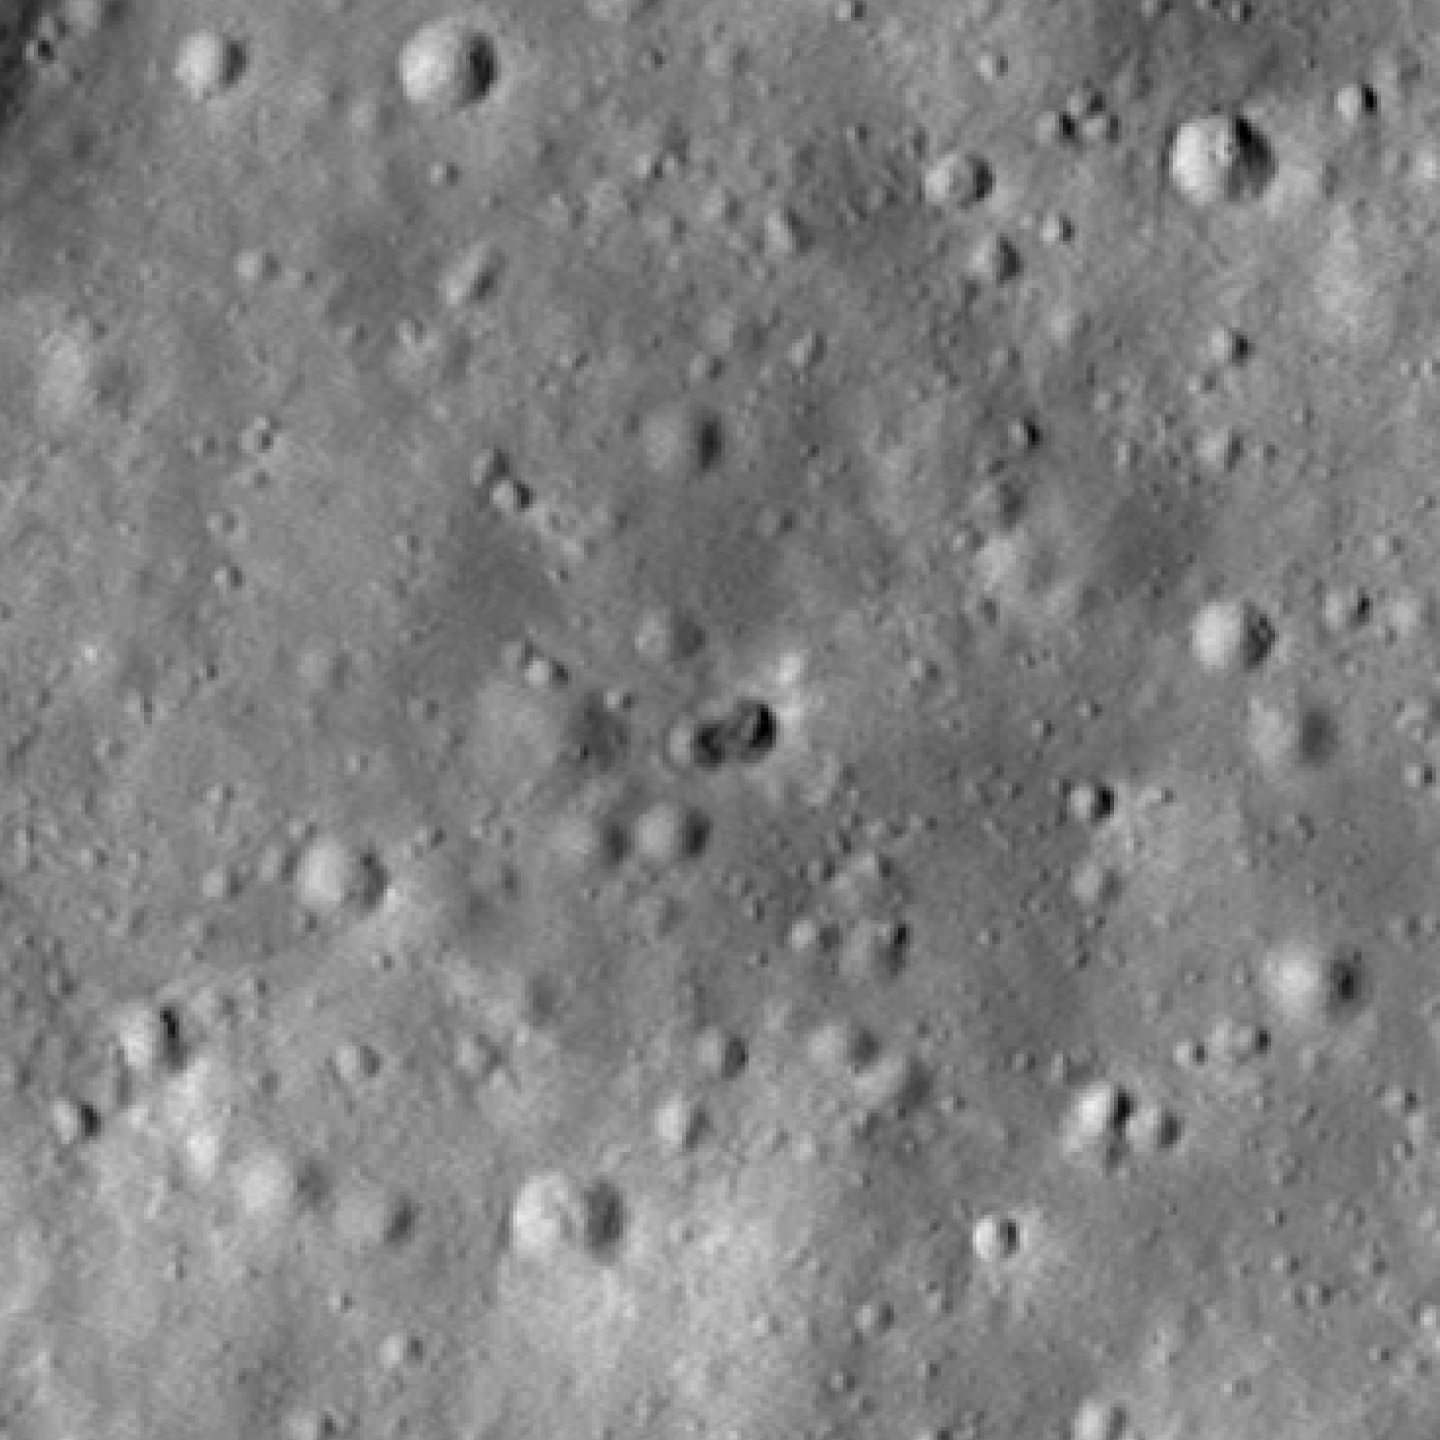 Nasa’s Lunar Lunar Reconnaissance Orbiter photographed a rocket collision site on the Moon. Photo: Nasa